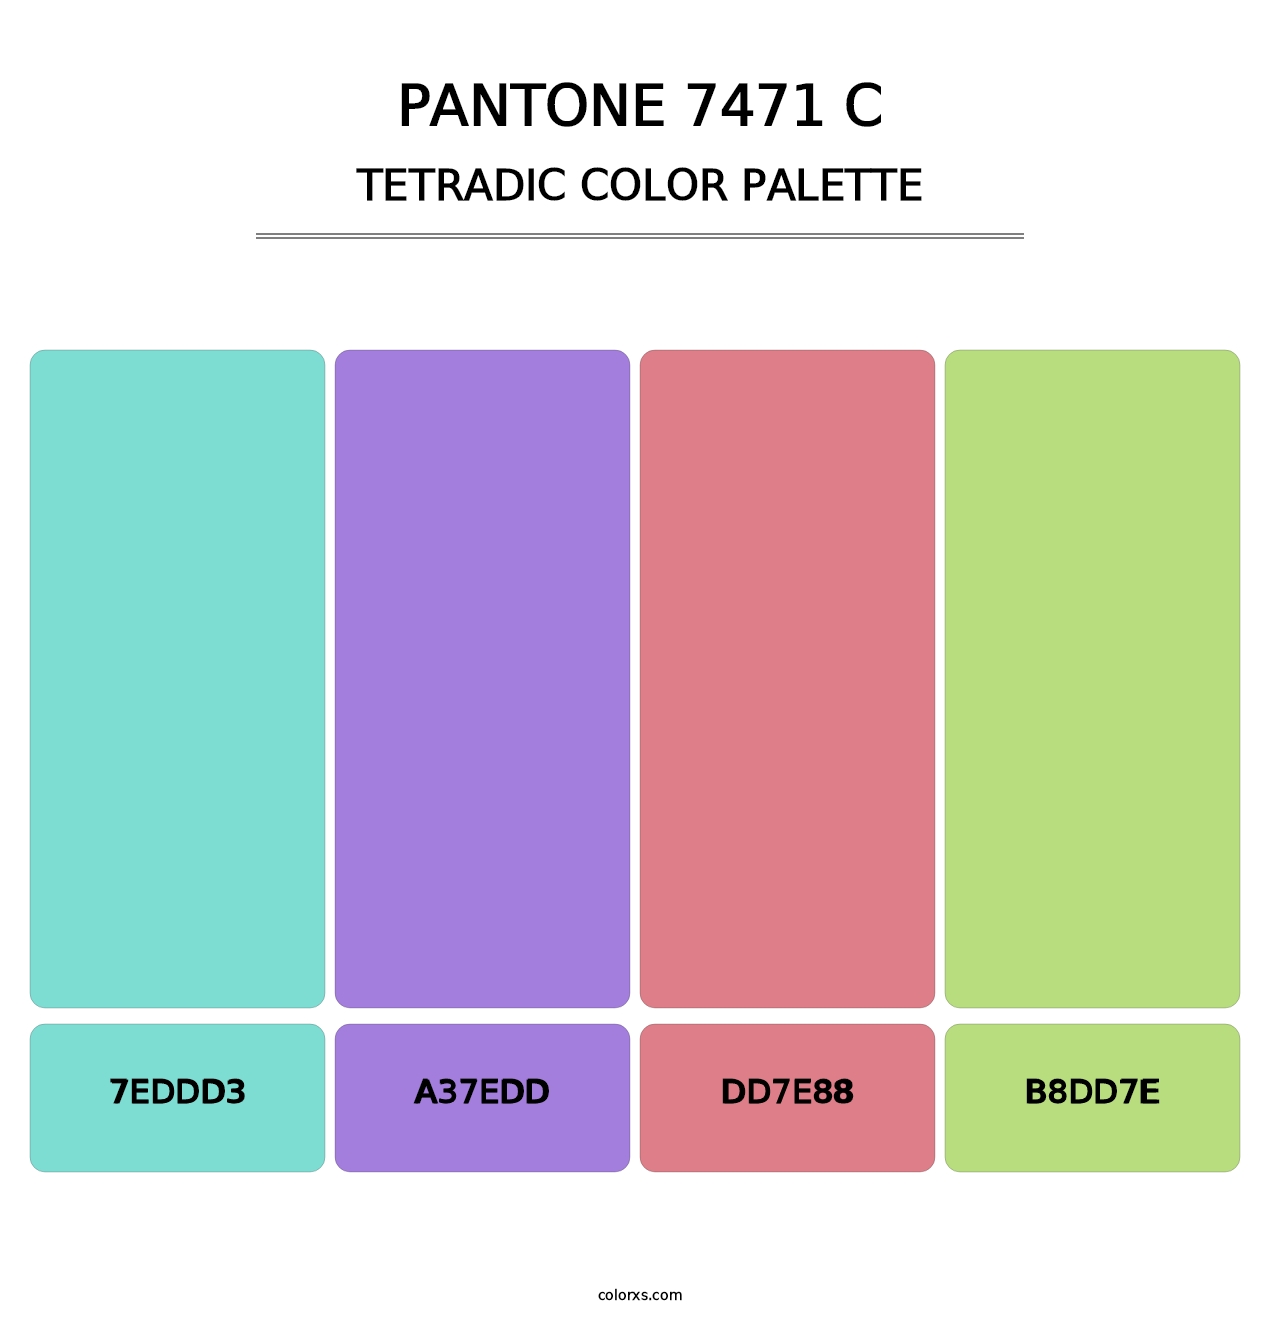 PANTONE 7471 C - Tetradic Color Palette